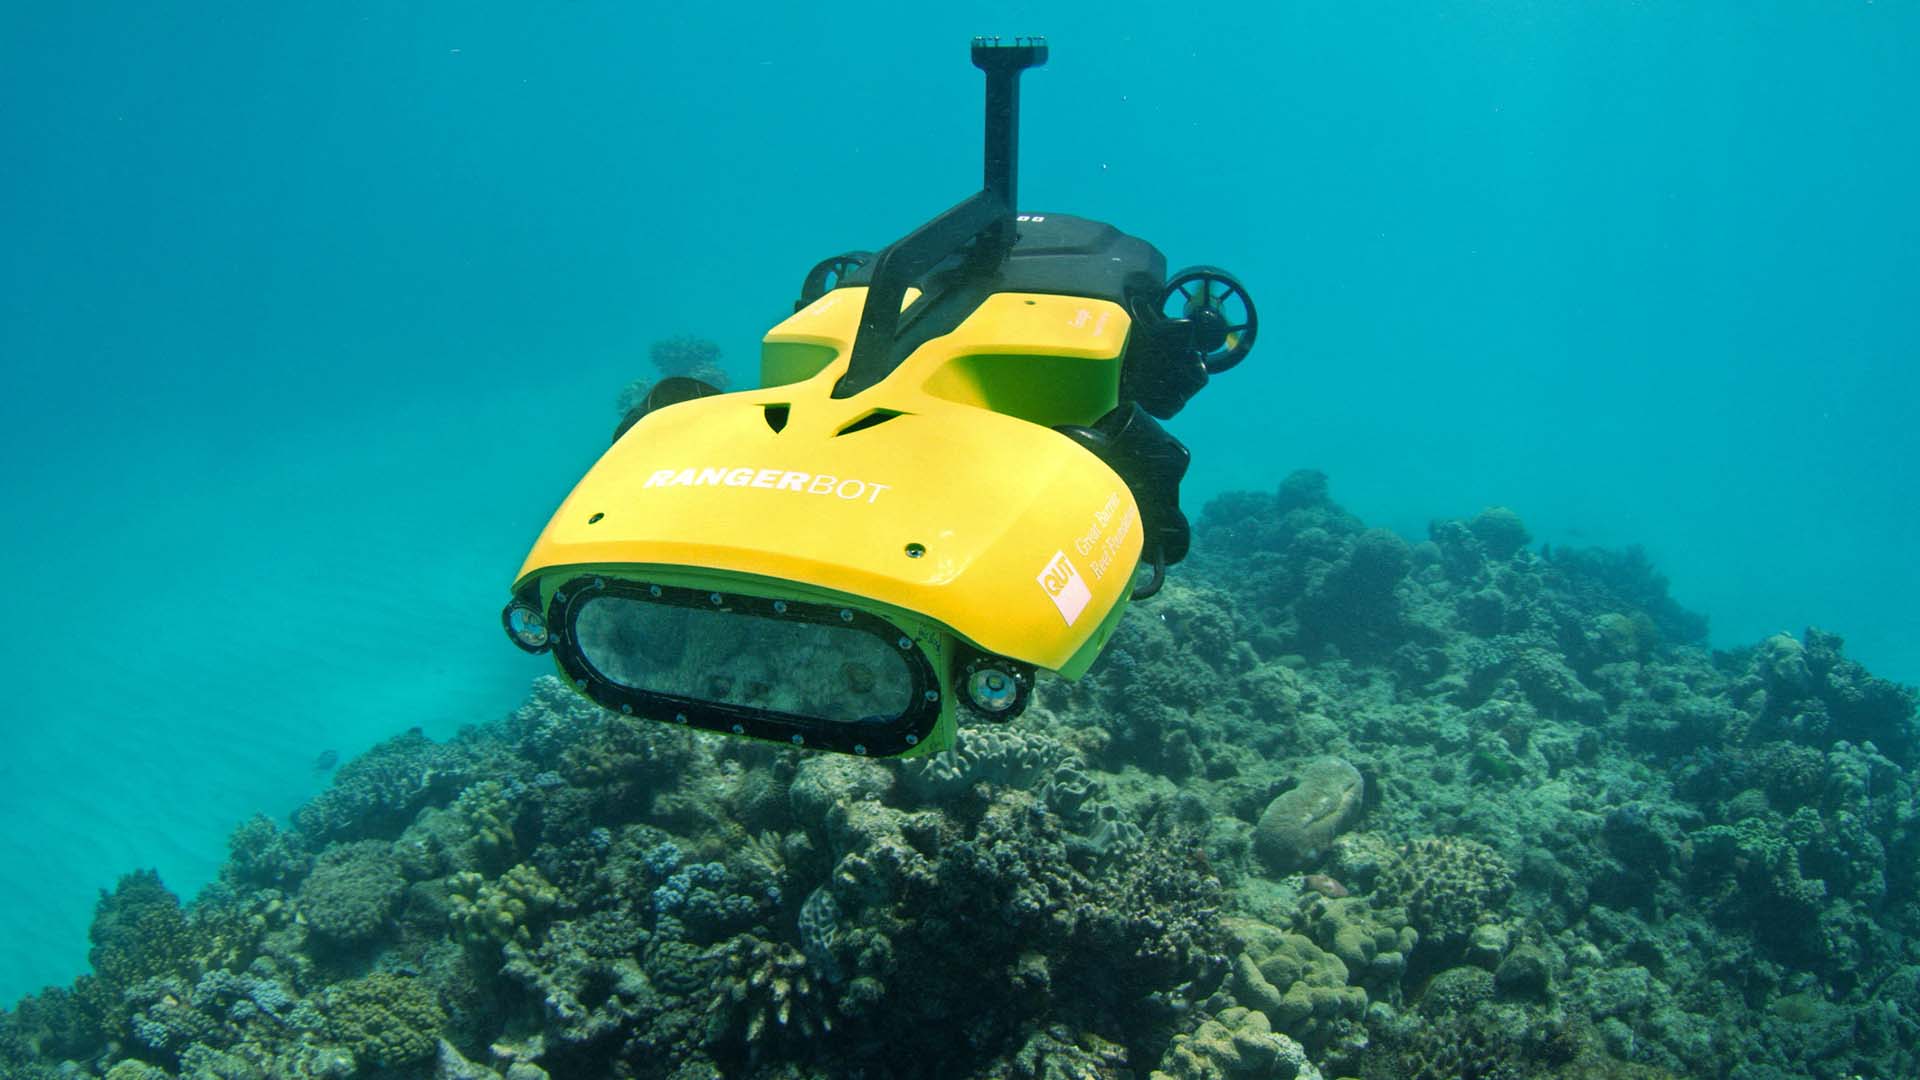 RangerBot Robot Saving Coral Reefs Australia Queensland University of Technology